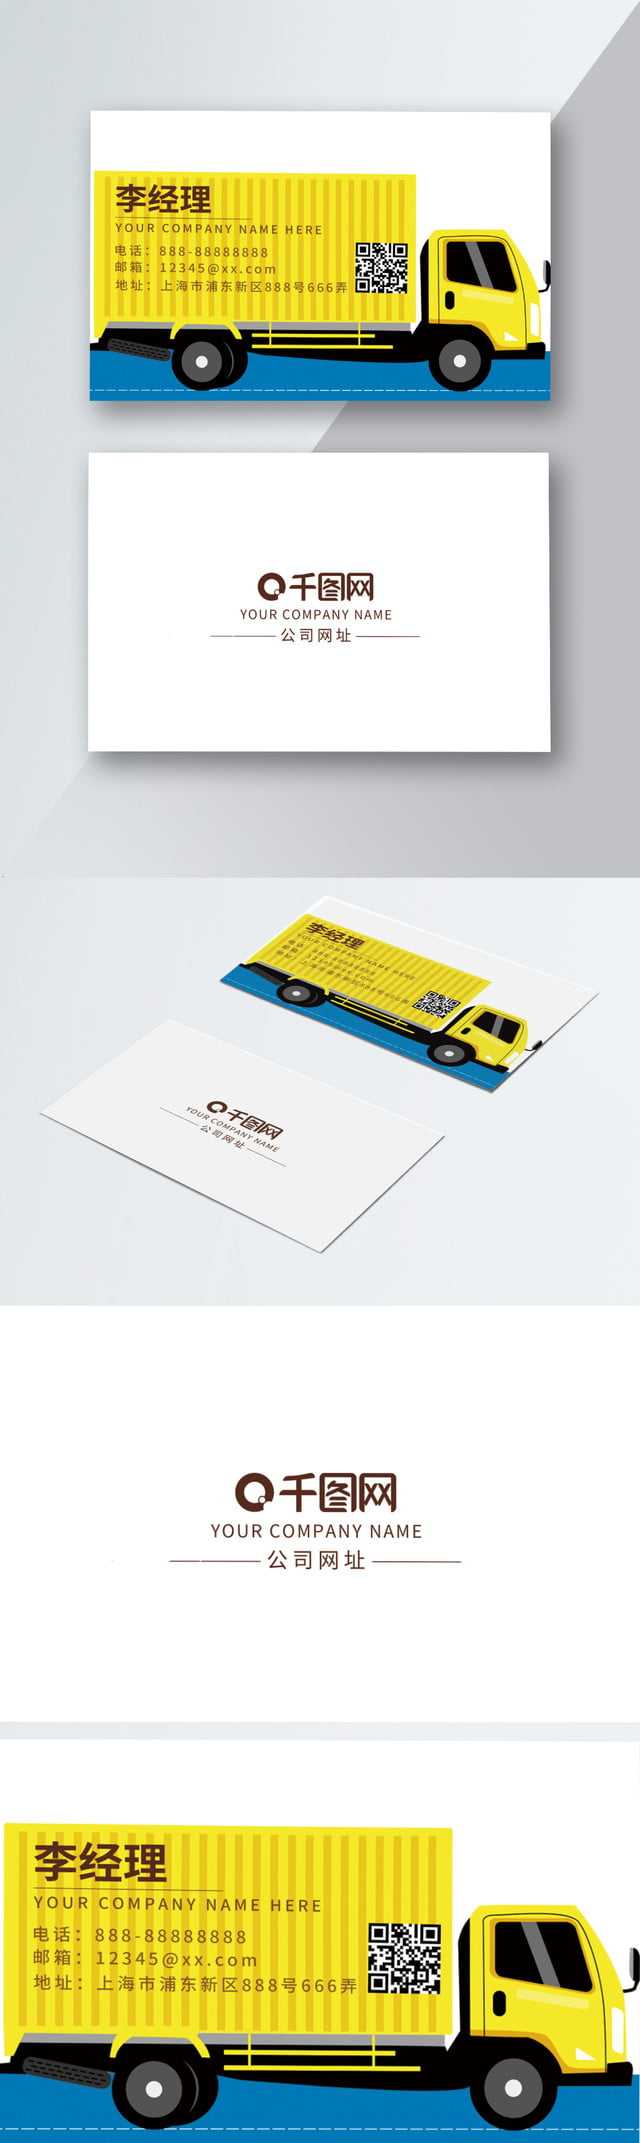 Truck Transportation Business Card Undertake Freight In Transport Business Cards Templates Free